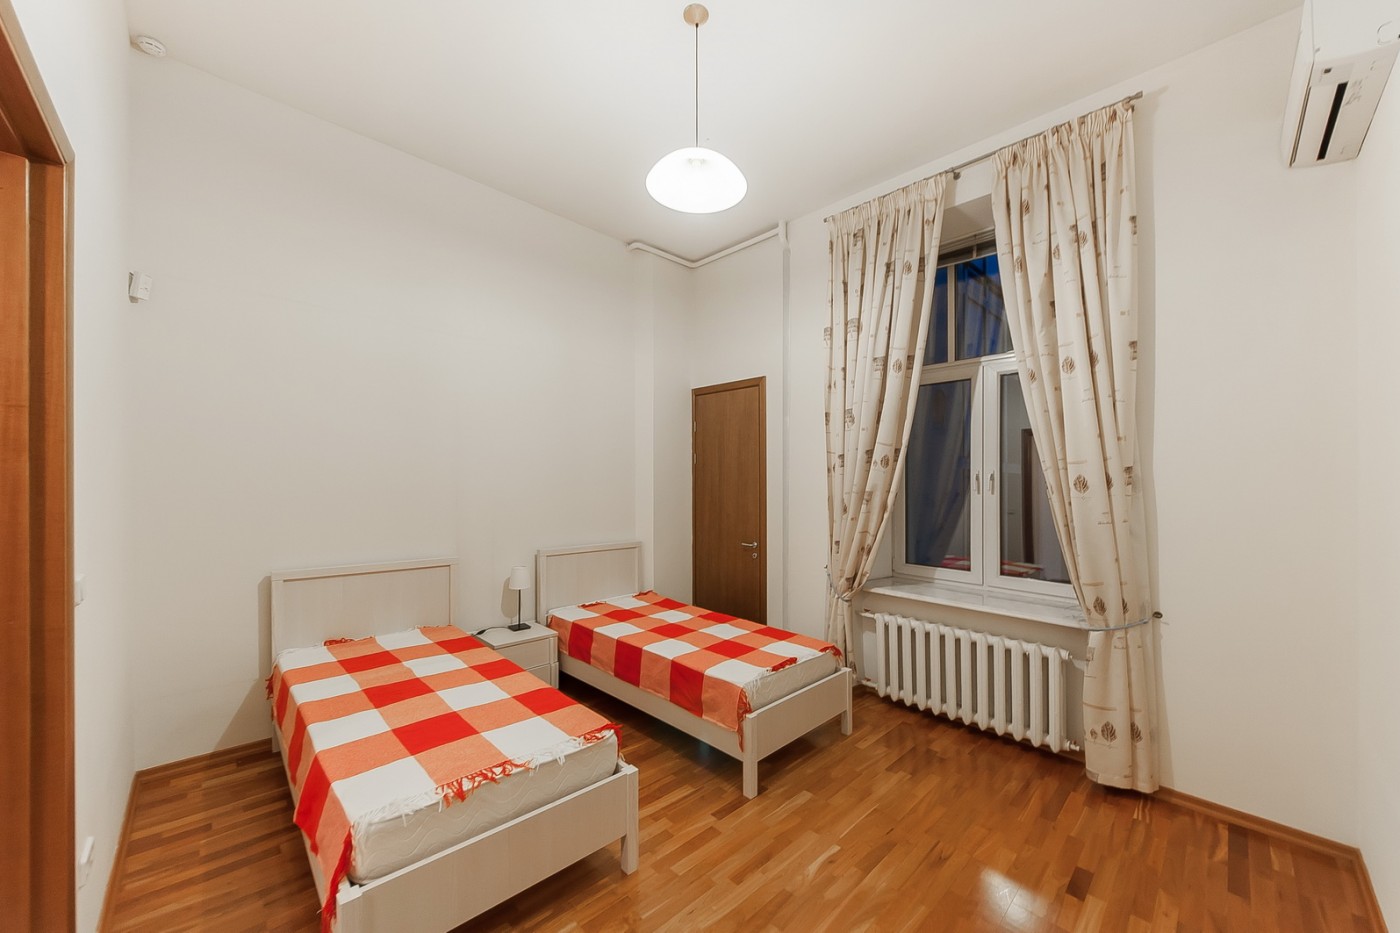 Apartment for rent on Arbat street, buiding 27/47 near metro station Arbatskaya by ASHTONS INTERNATIONAL REALTY